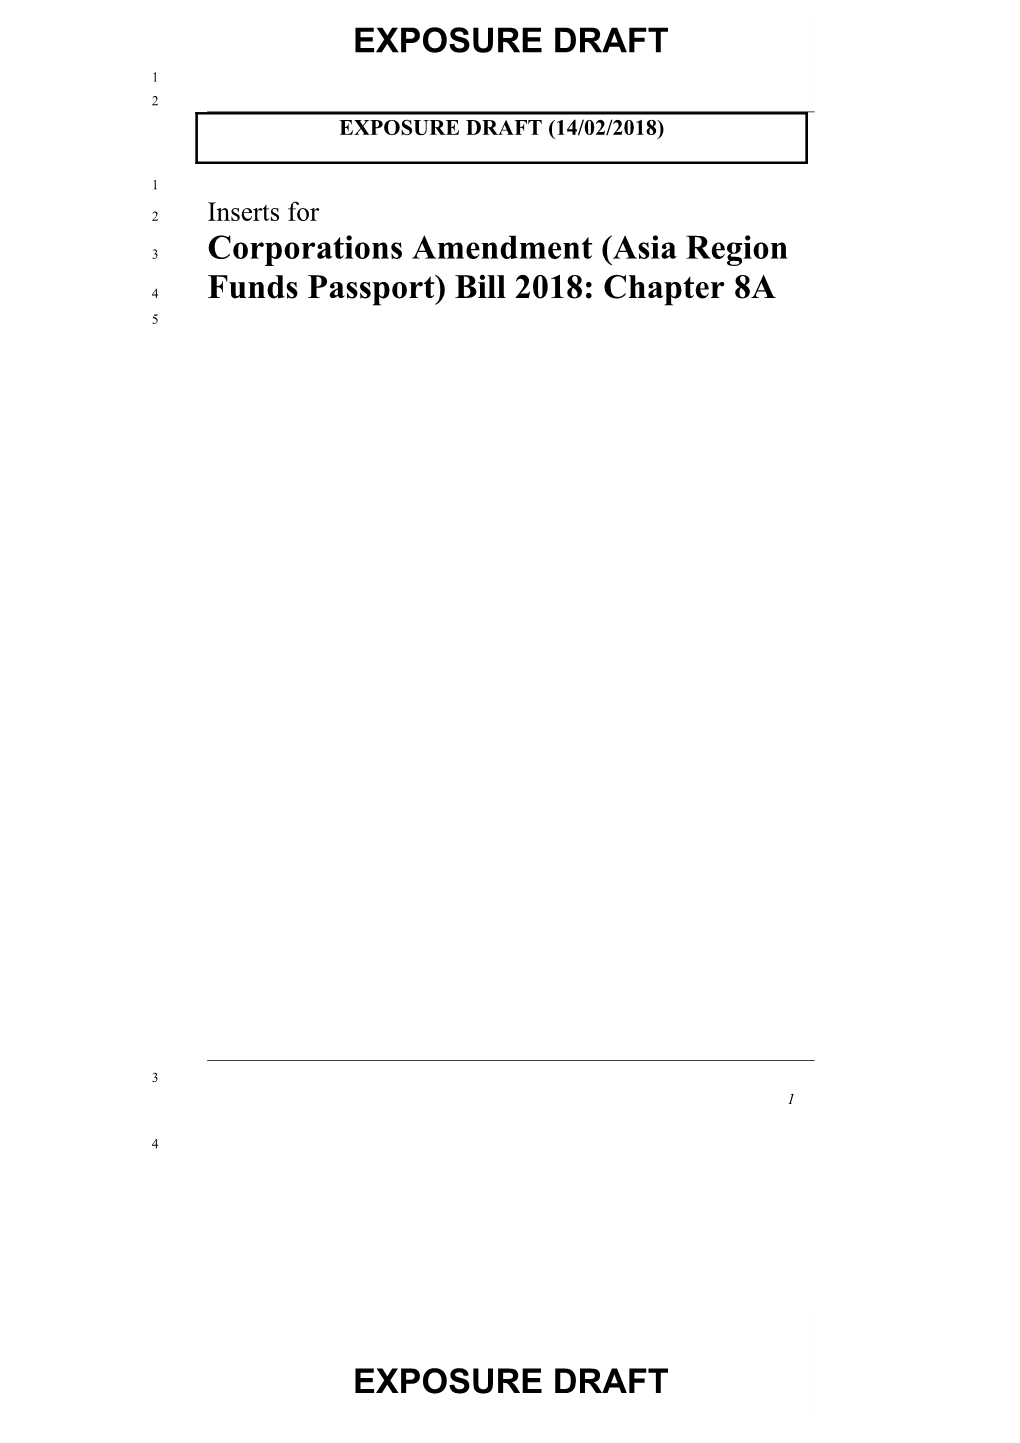 Exposure Draft - Corporations Amendment (Asia Region Funds Passport) Bill 2018: Chapter 8A